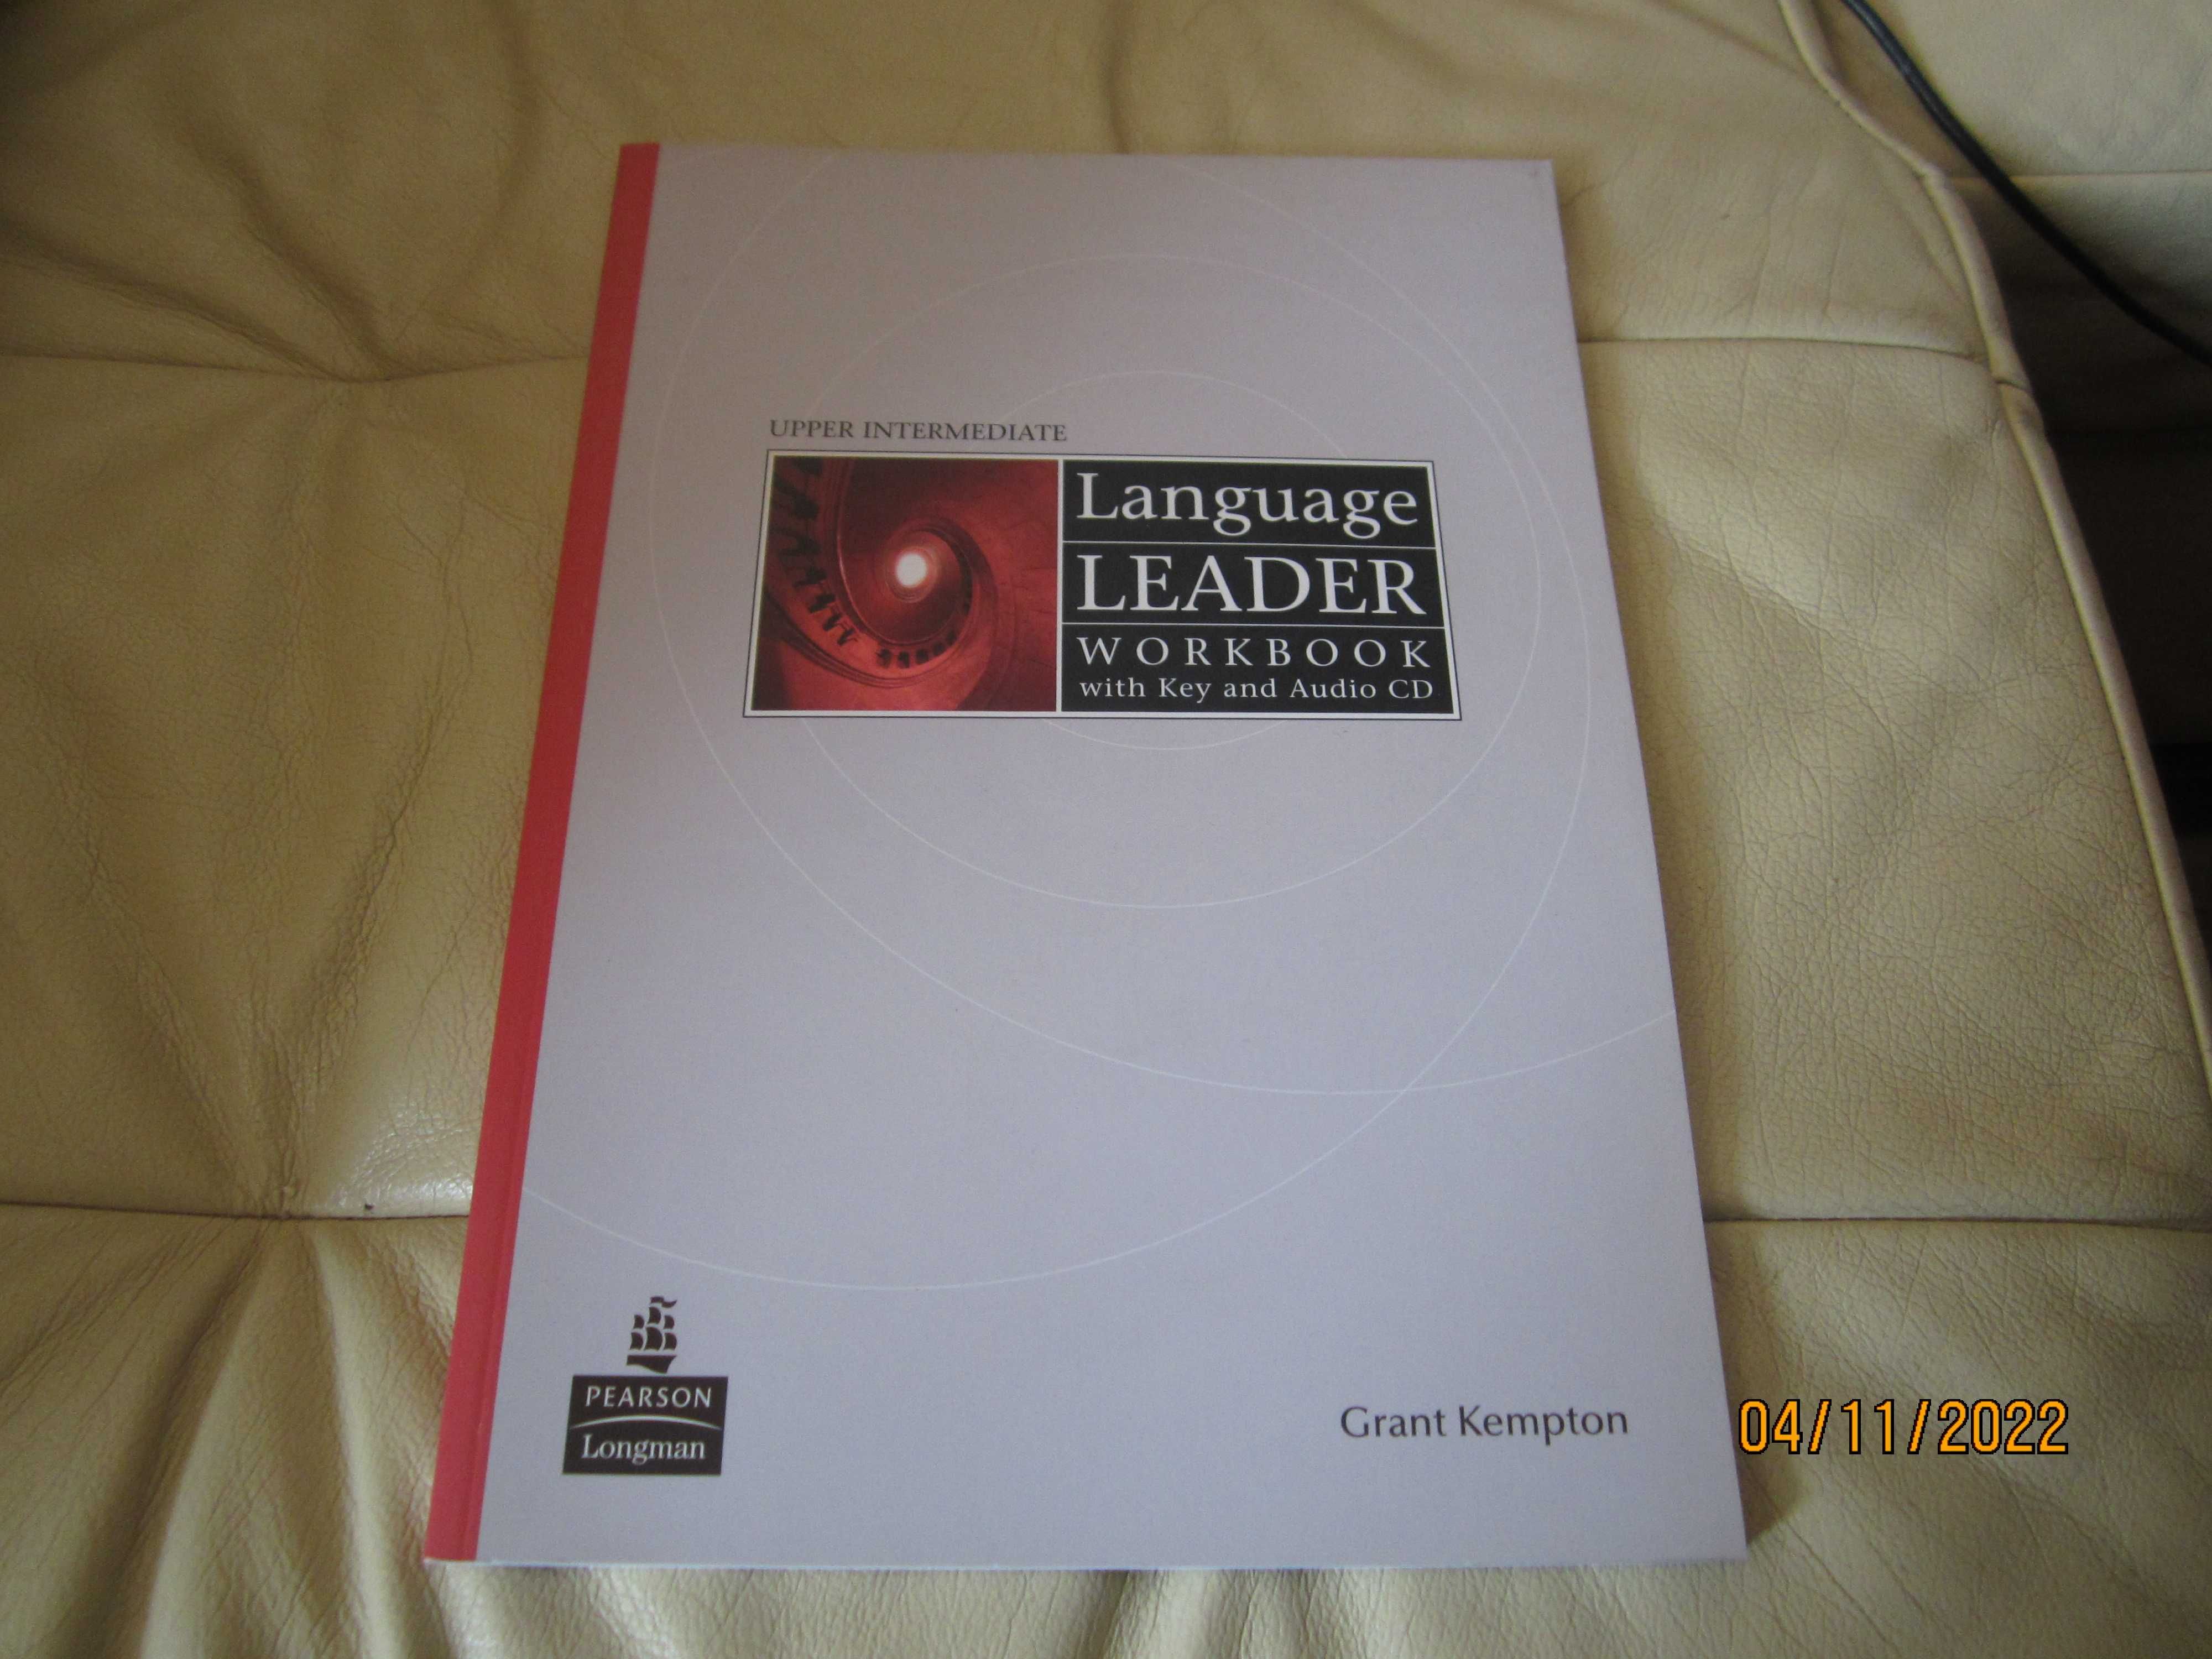 Upper intermediate Language leader workbook